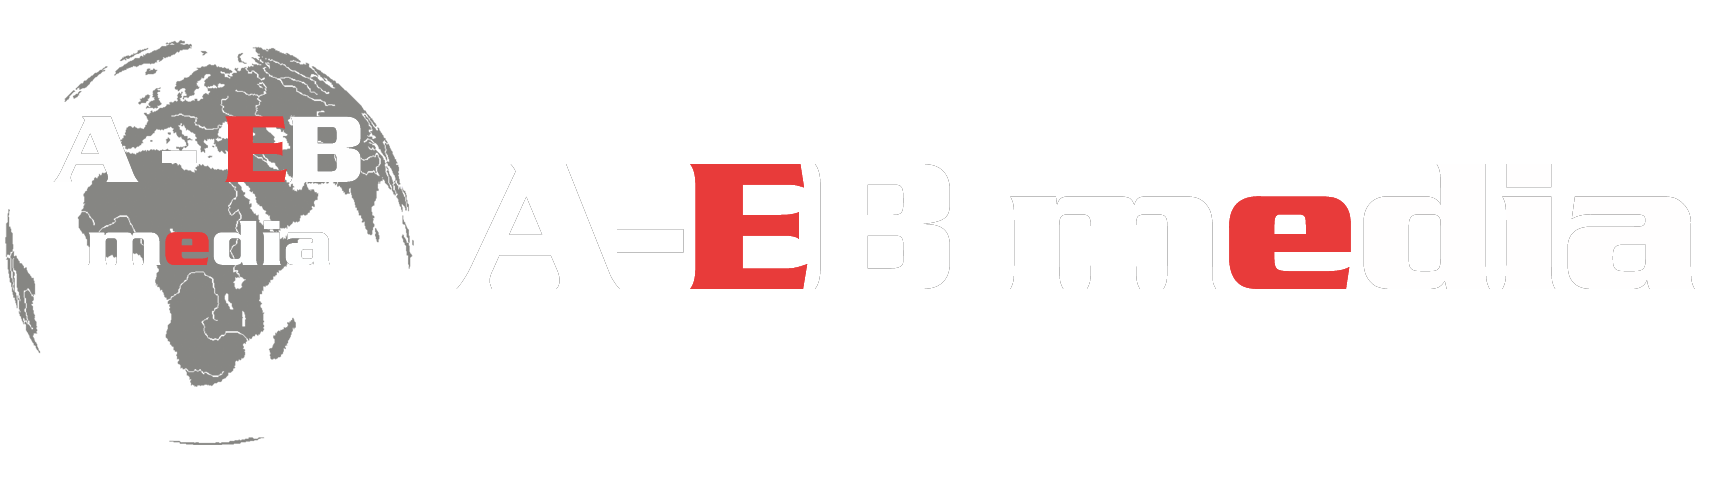 A-EB media